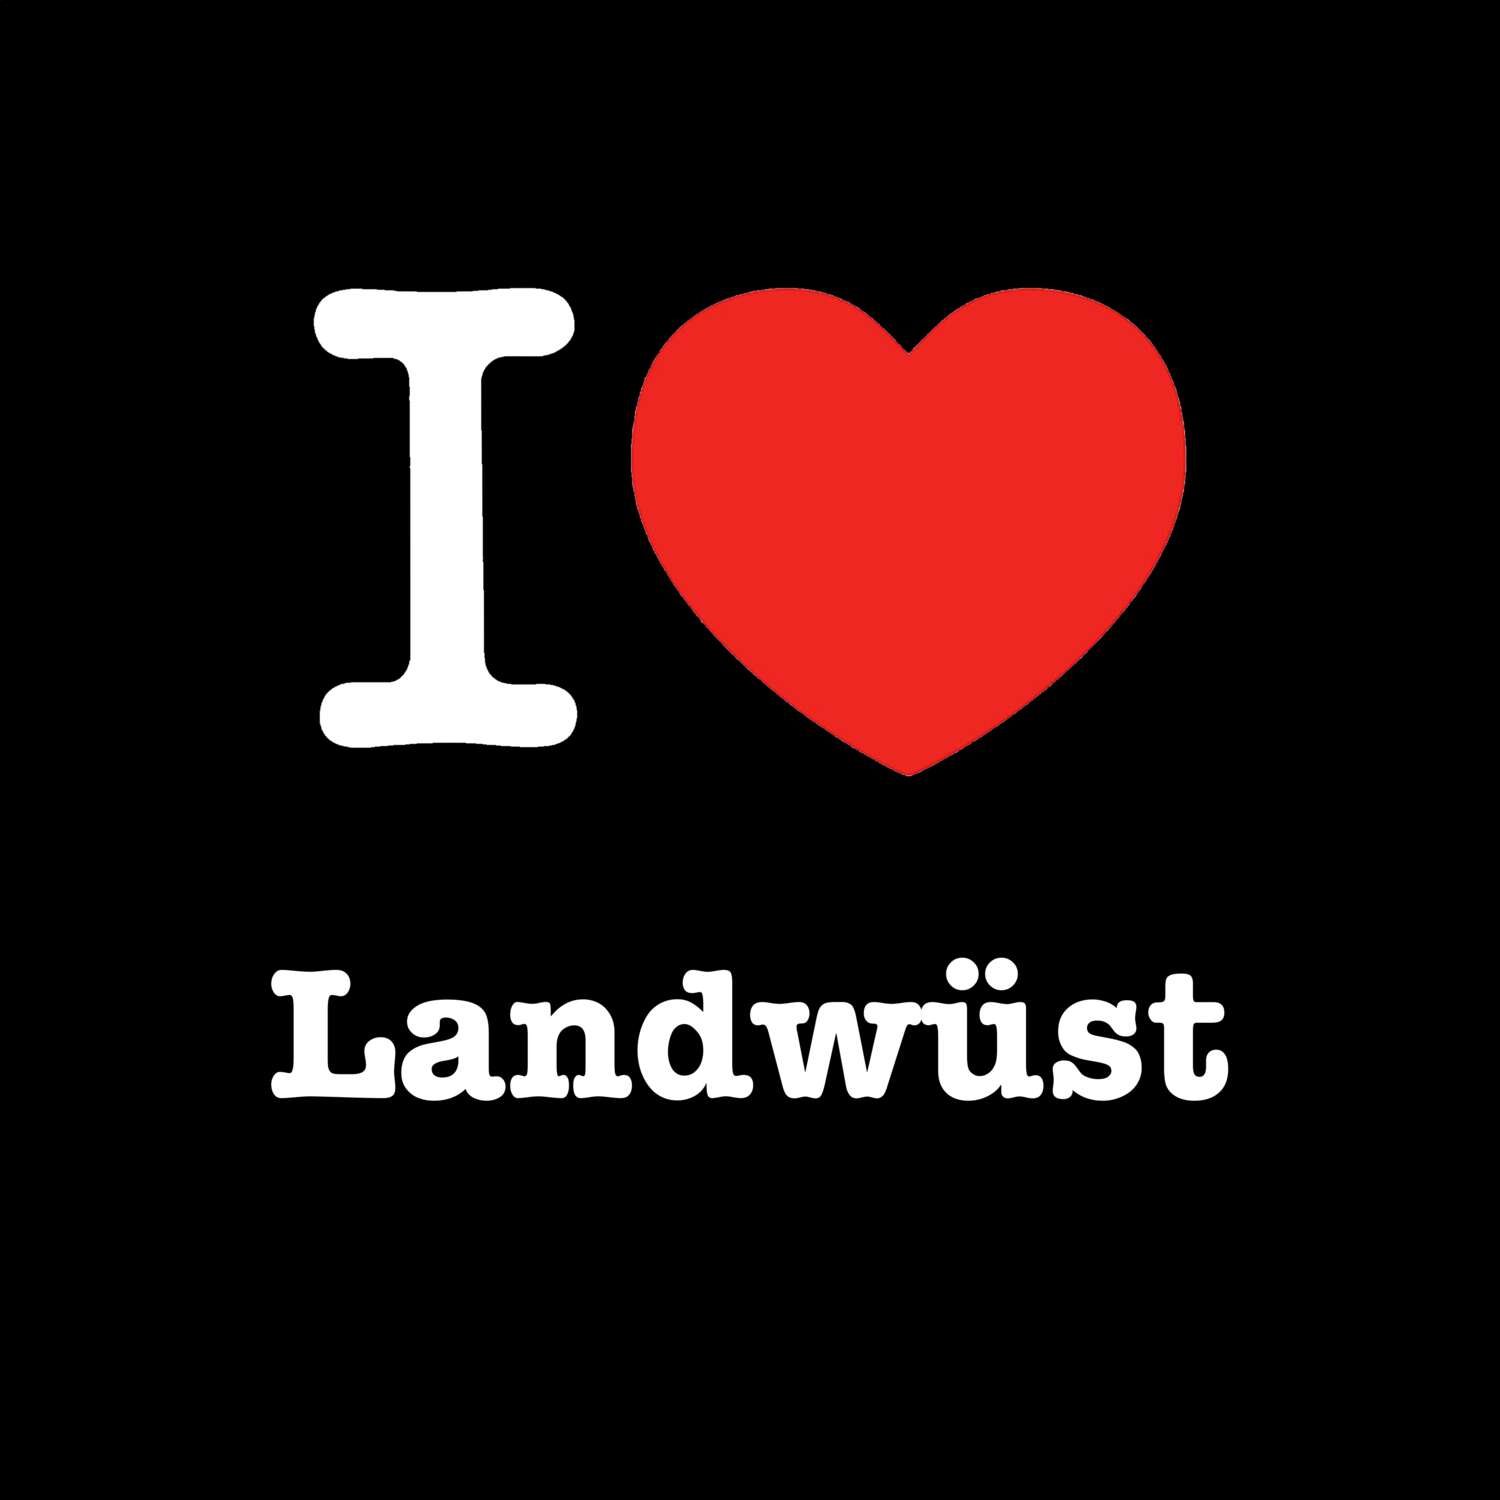 Landwüst T-Shirt »I love«